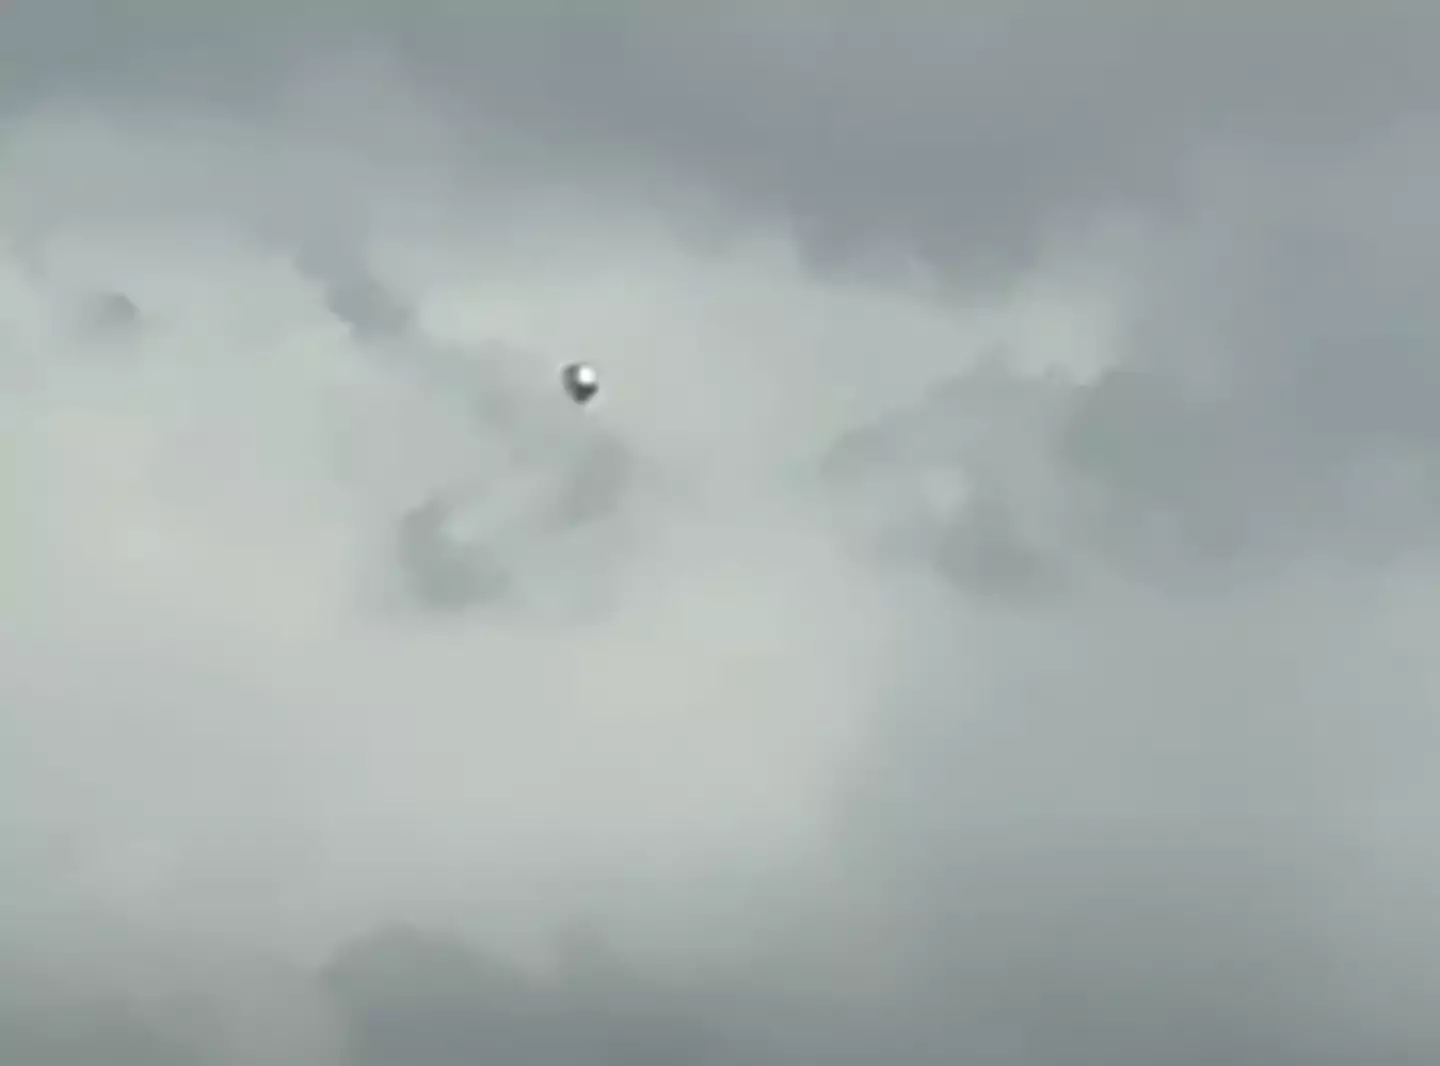 The UFO over SRQ Airport.